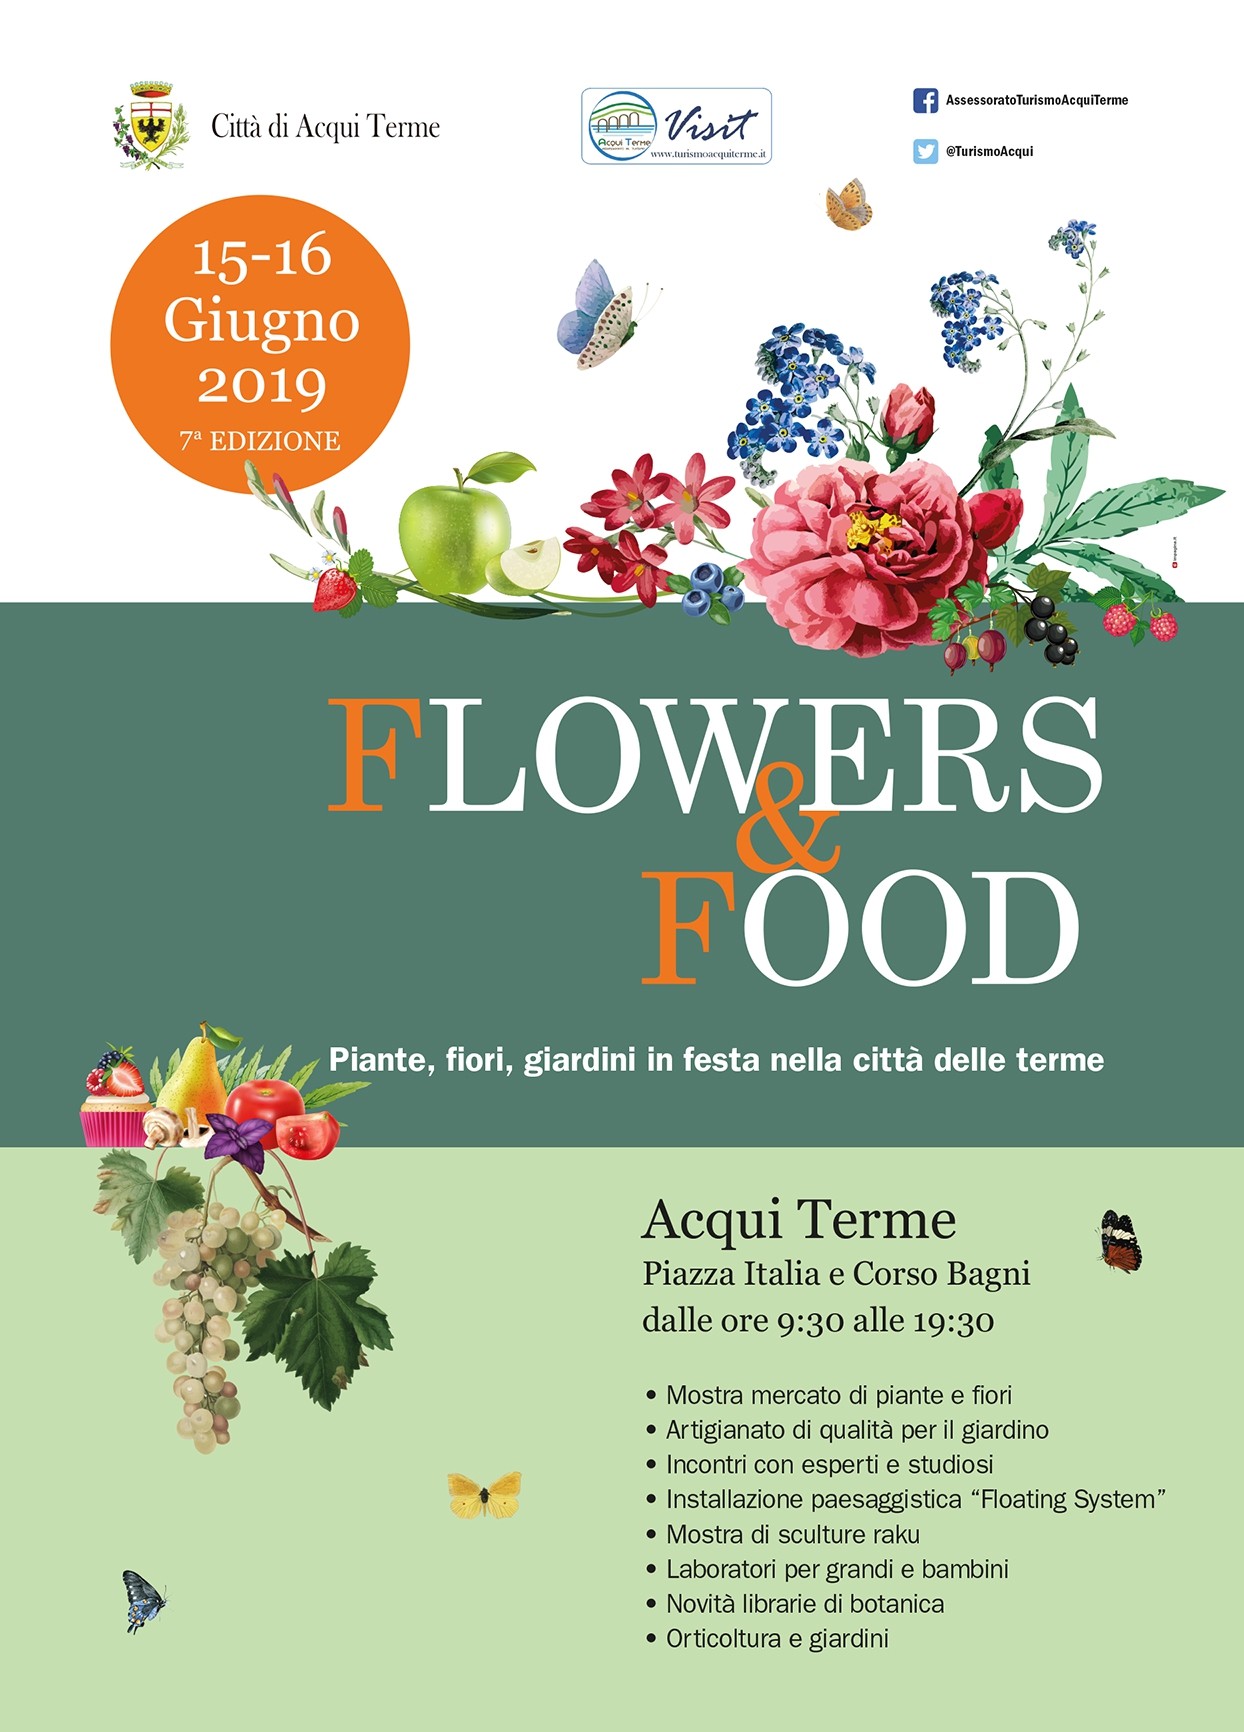 Flowers & Food - Acqui terme 2019